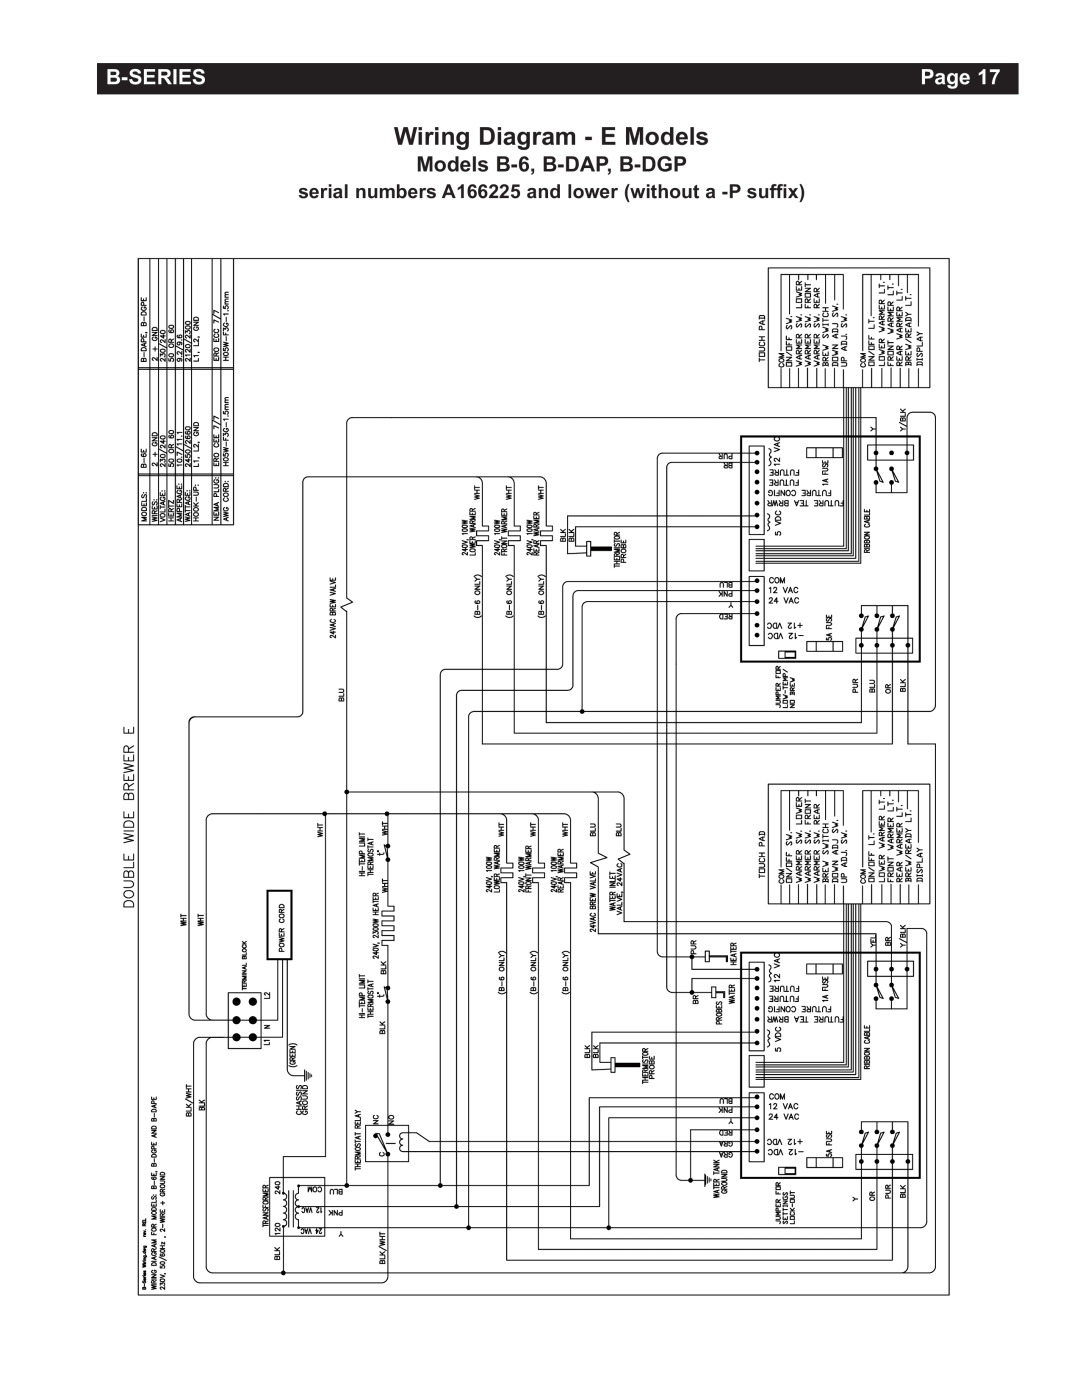 Grindmaster AMW B-Series manual Wiring Diagram - E Models, Page, Models B-6, B-DAP, B-DGP 